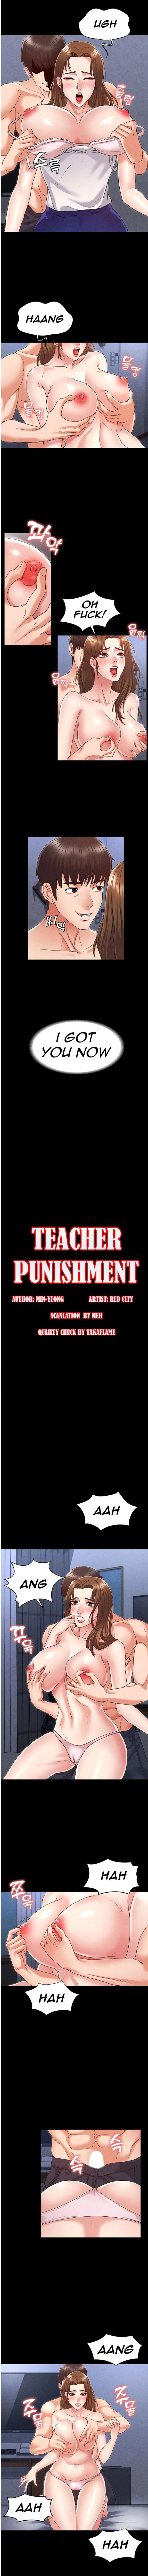 TEACHER PUNISHMENT Ch.1-11 19